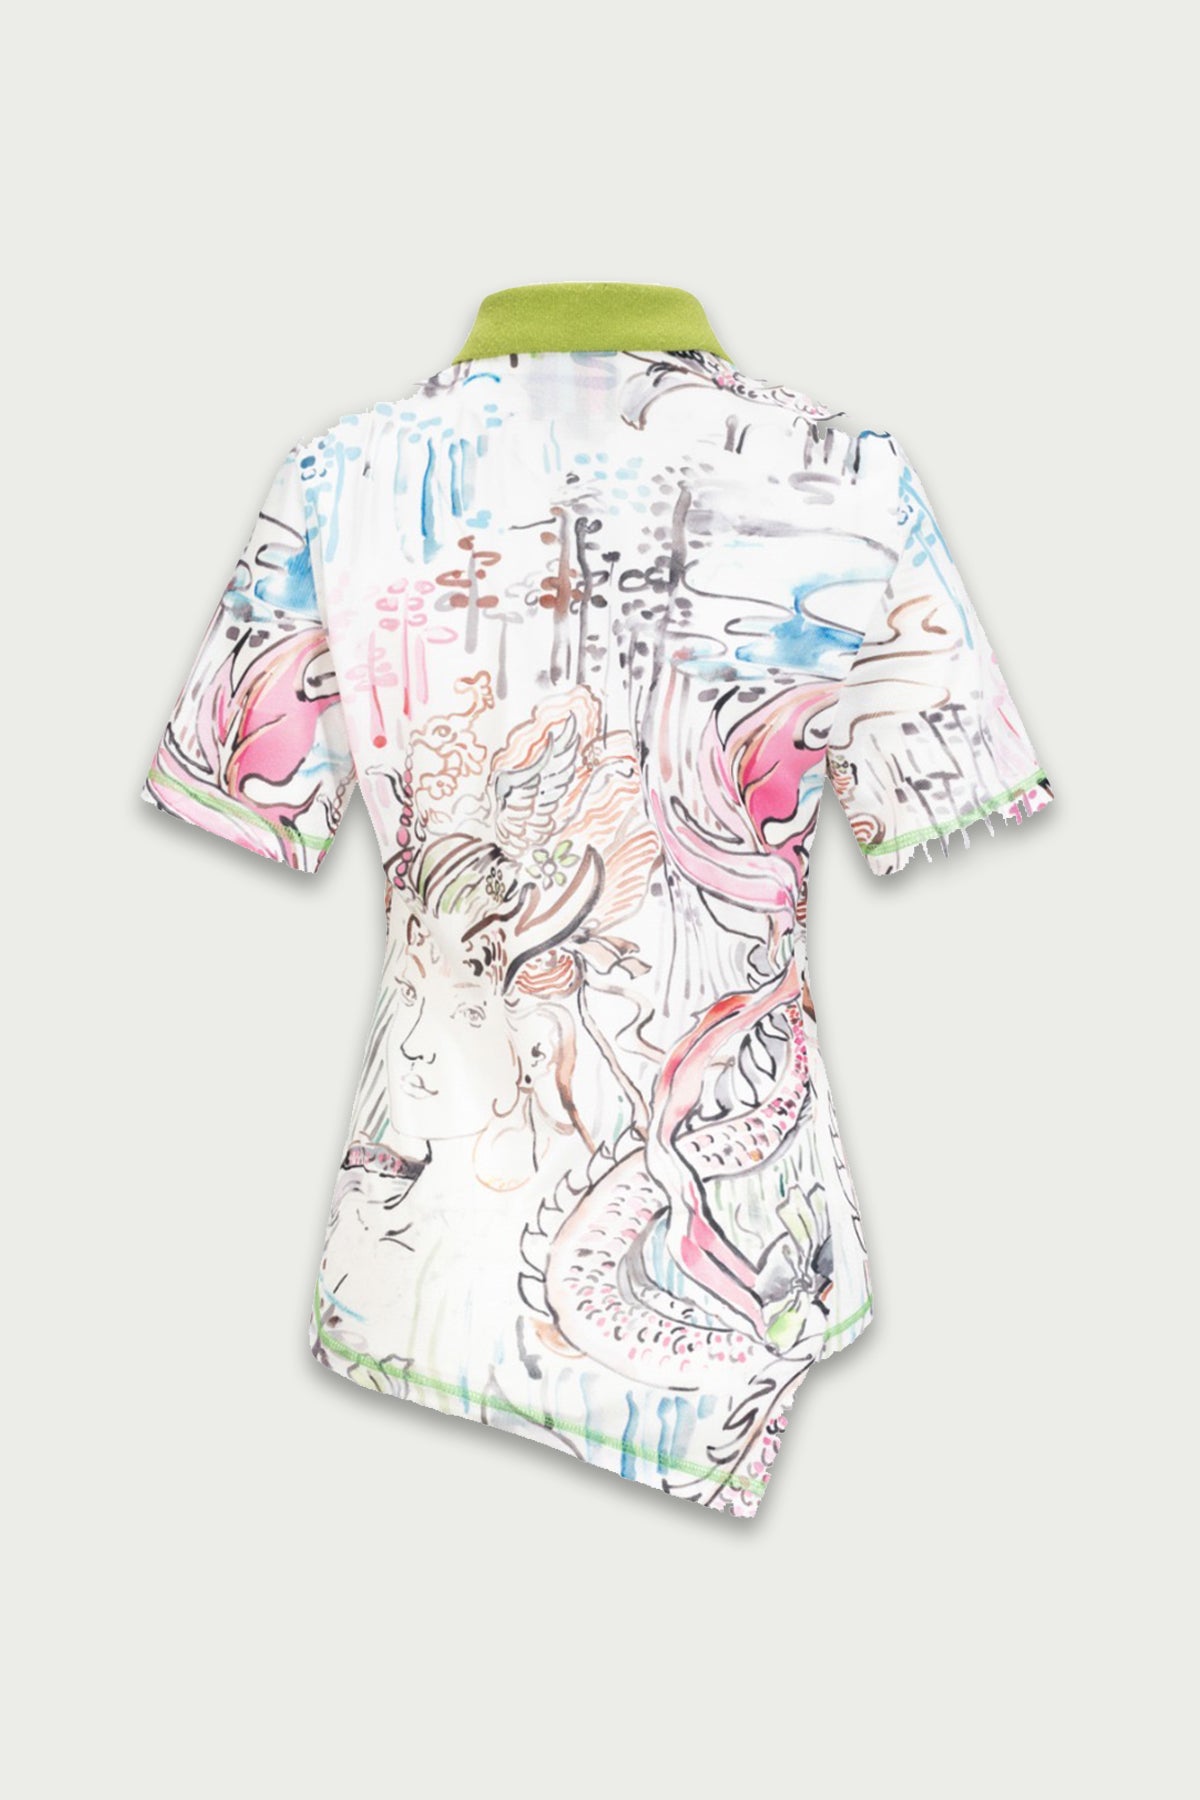 Mukzin | Green Collar Printed T shirt - Dragon Scale Pavilion